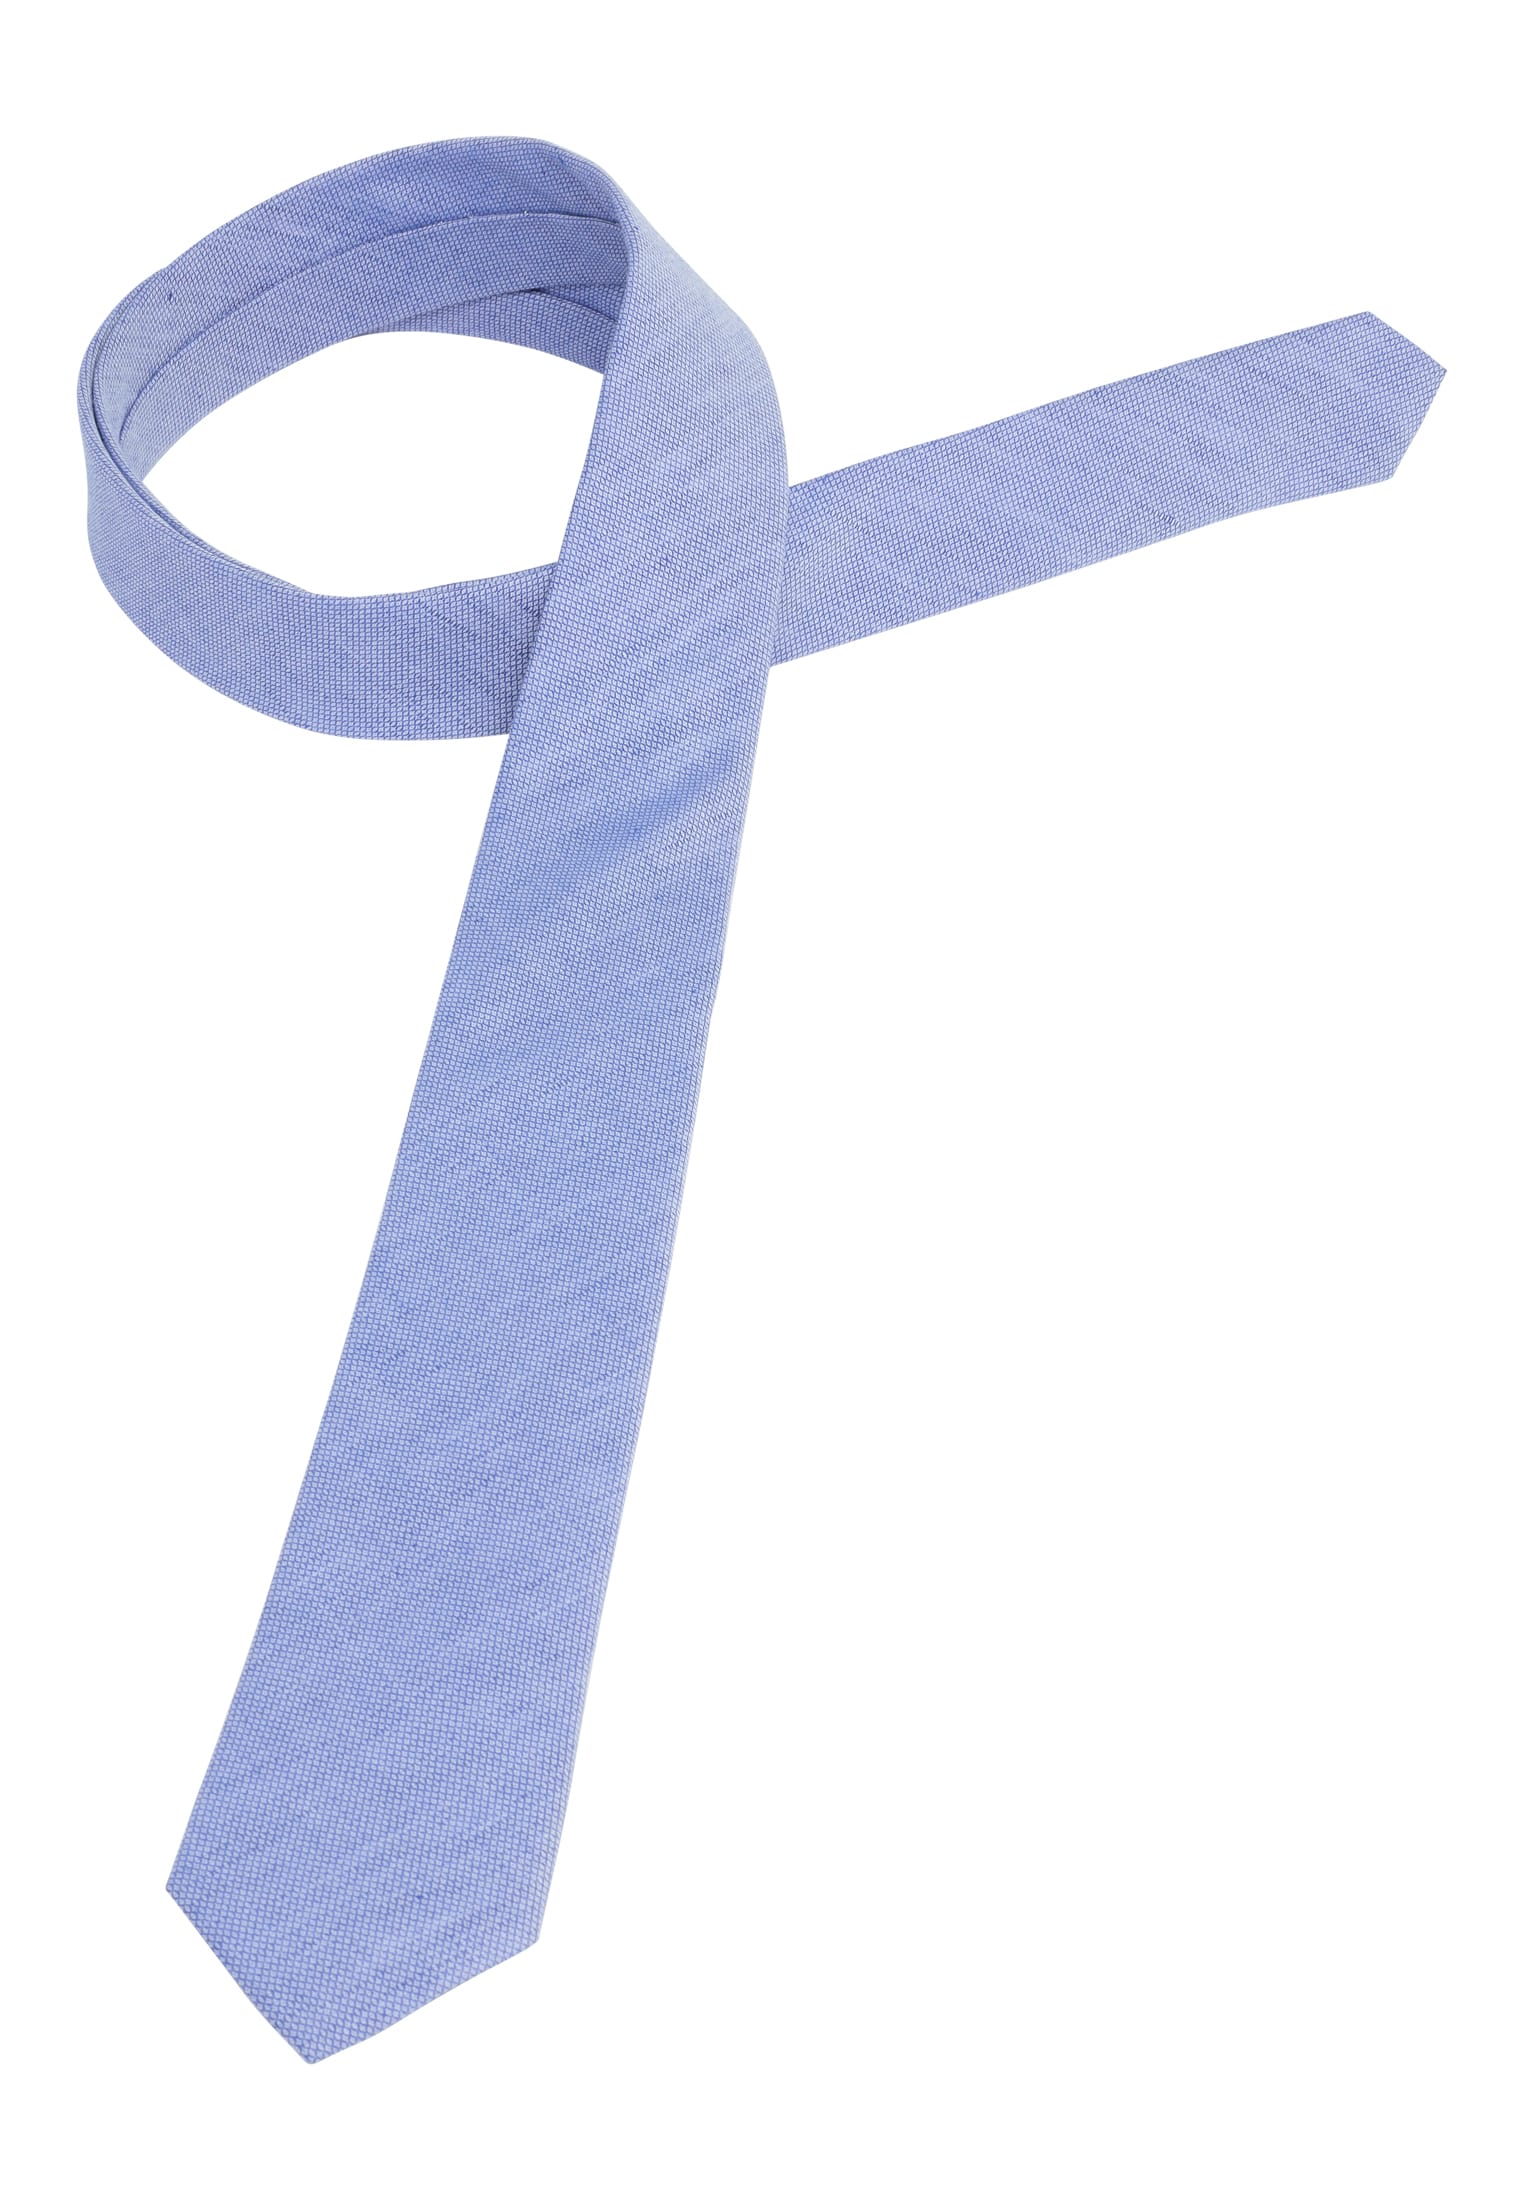 Krawatte in royal blau strukturiert | royal blau | 142 | 1AC01947-01-51-142